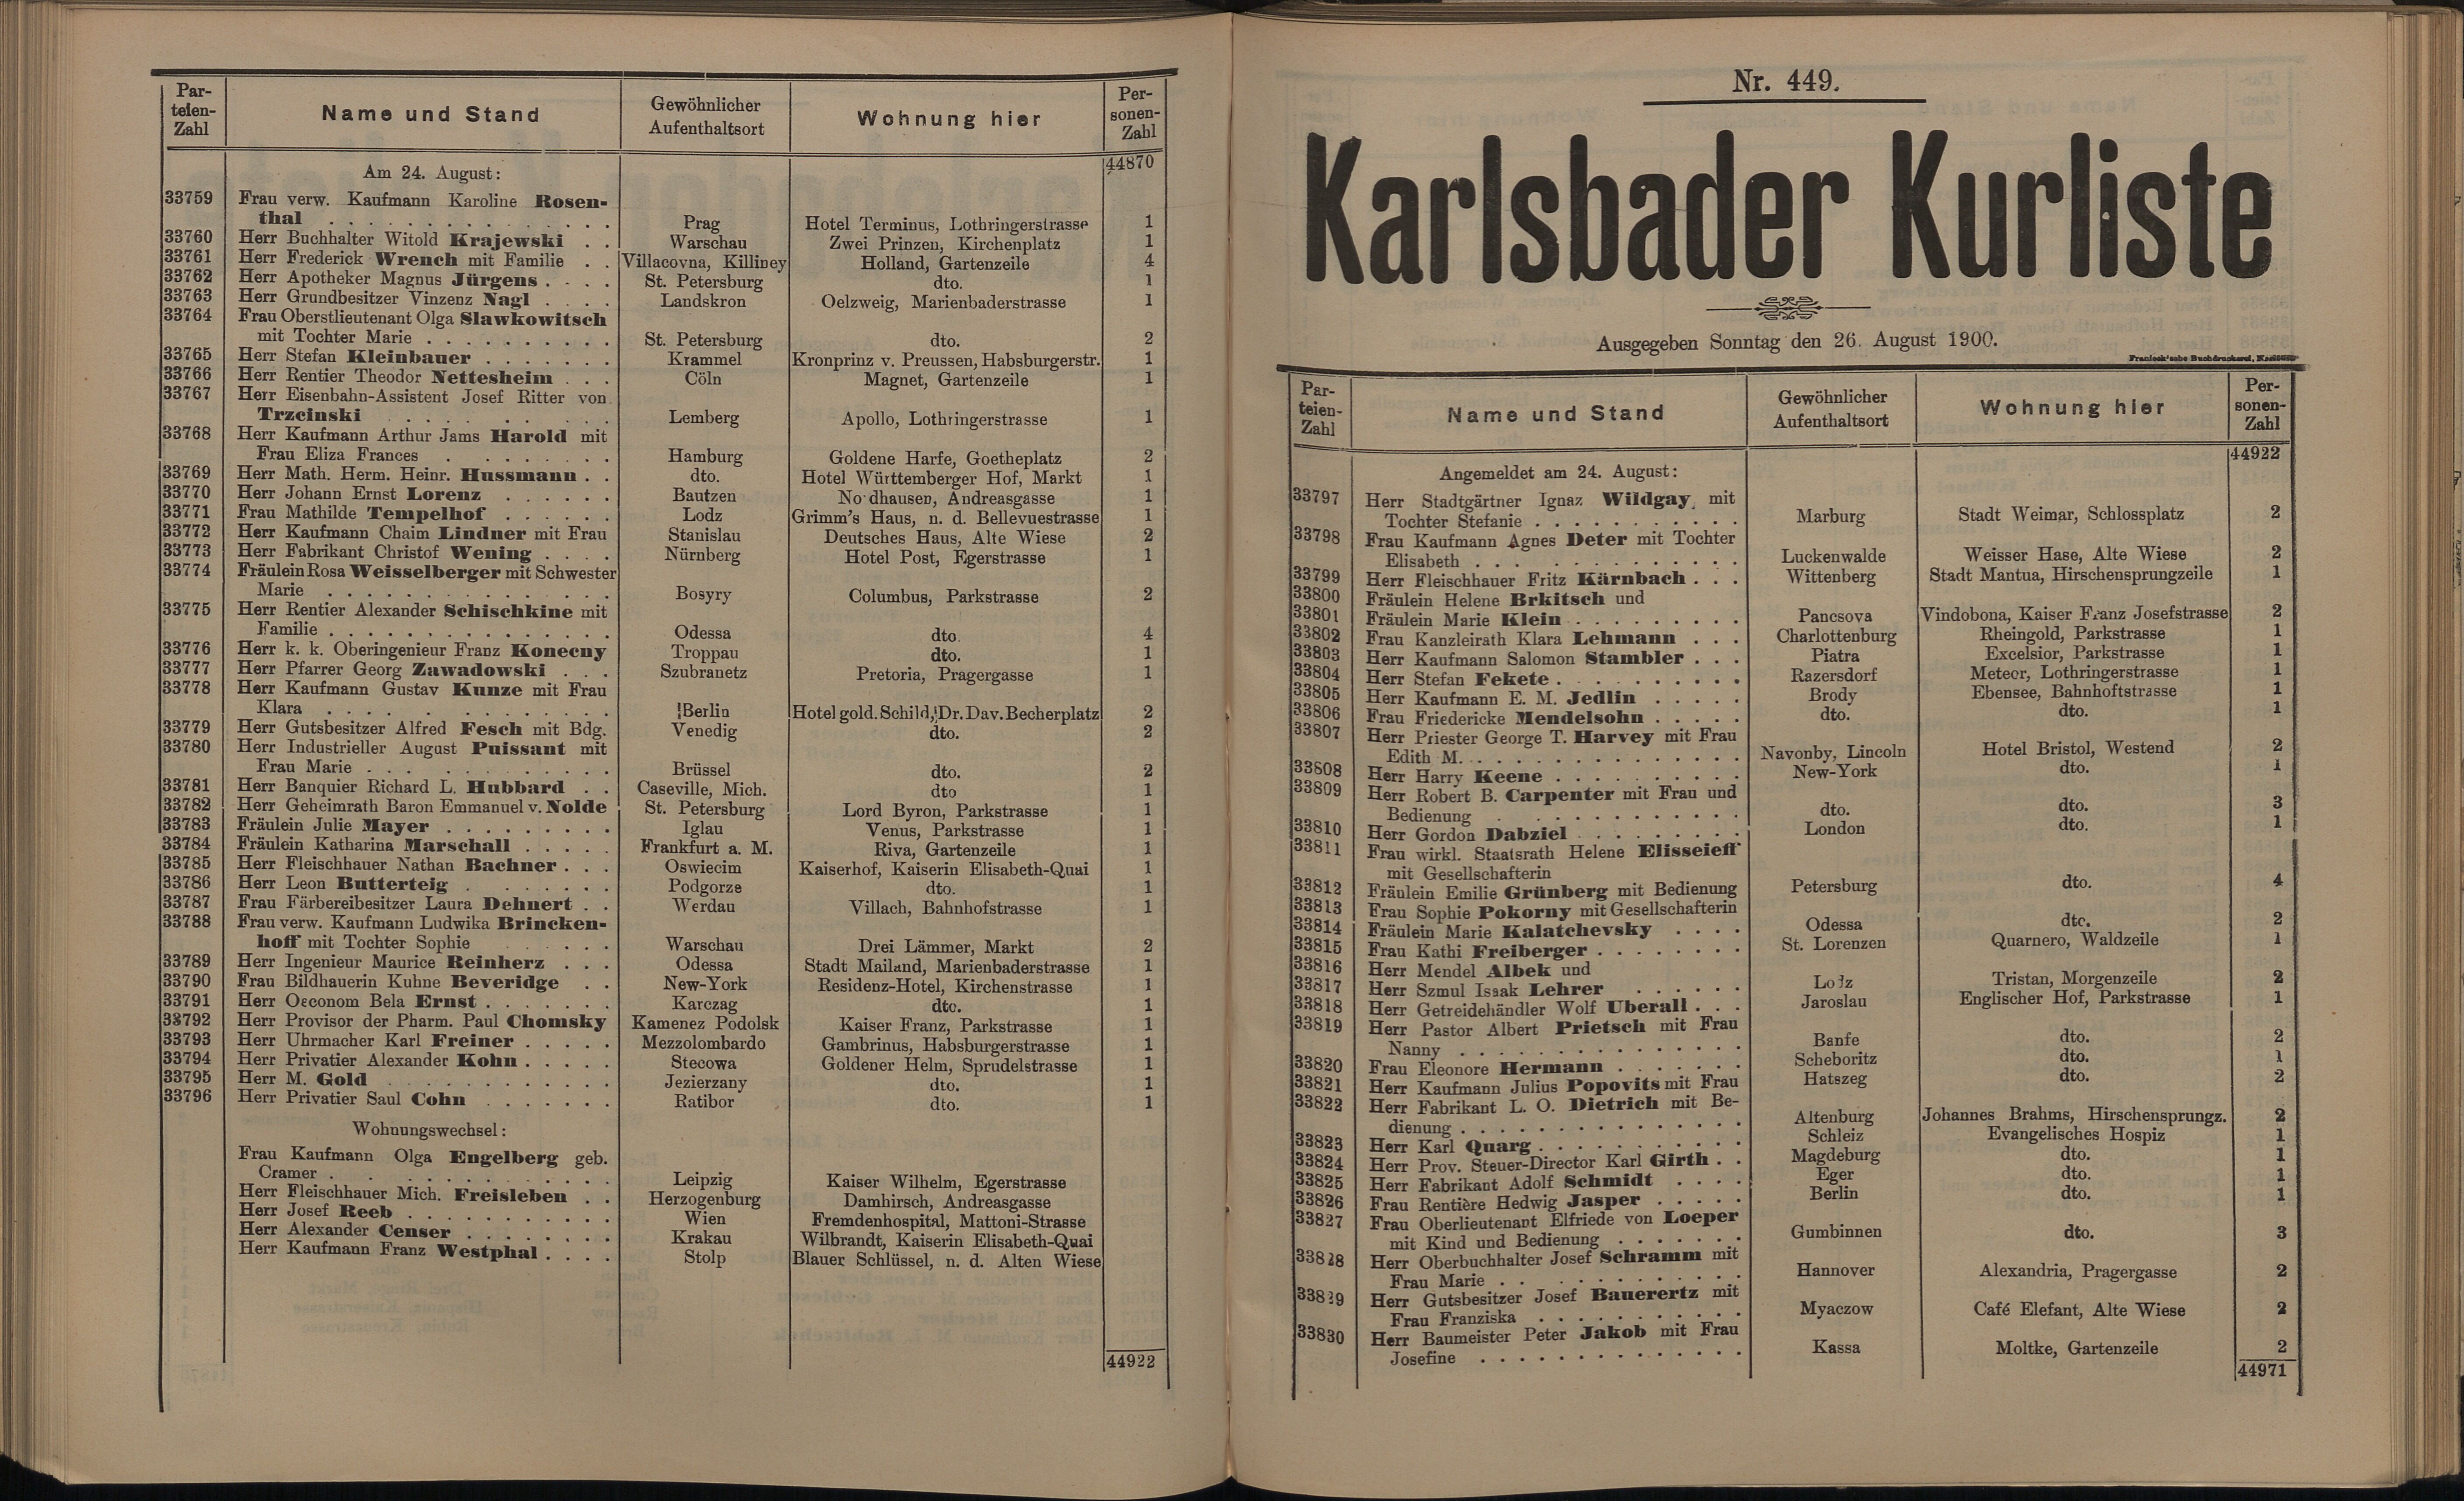 469. soap-kv_knihovna_karlsbader-kurliste-1900_4700